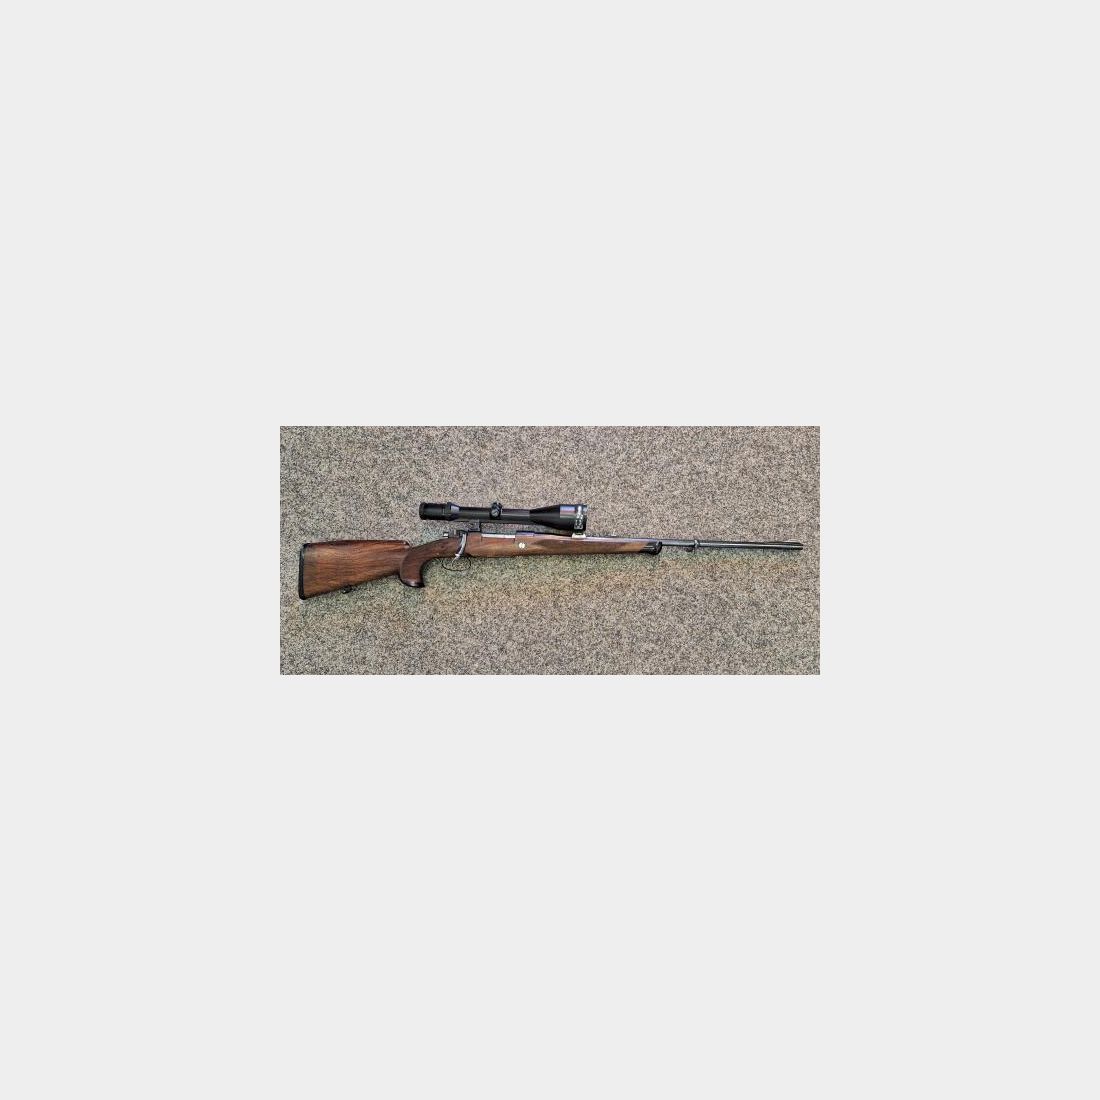 Repetierbüchse Mauser 98 Kal. 6,5x68